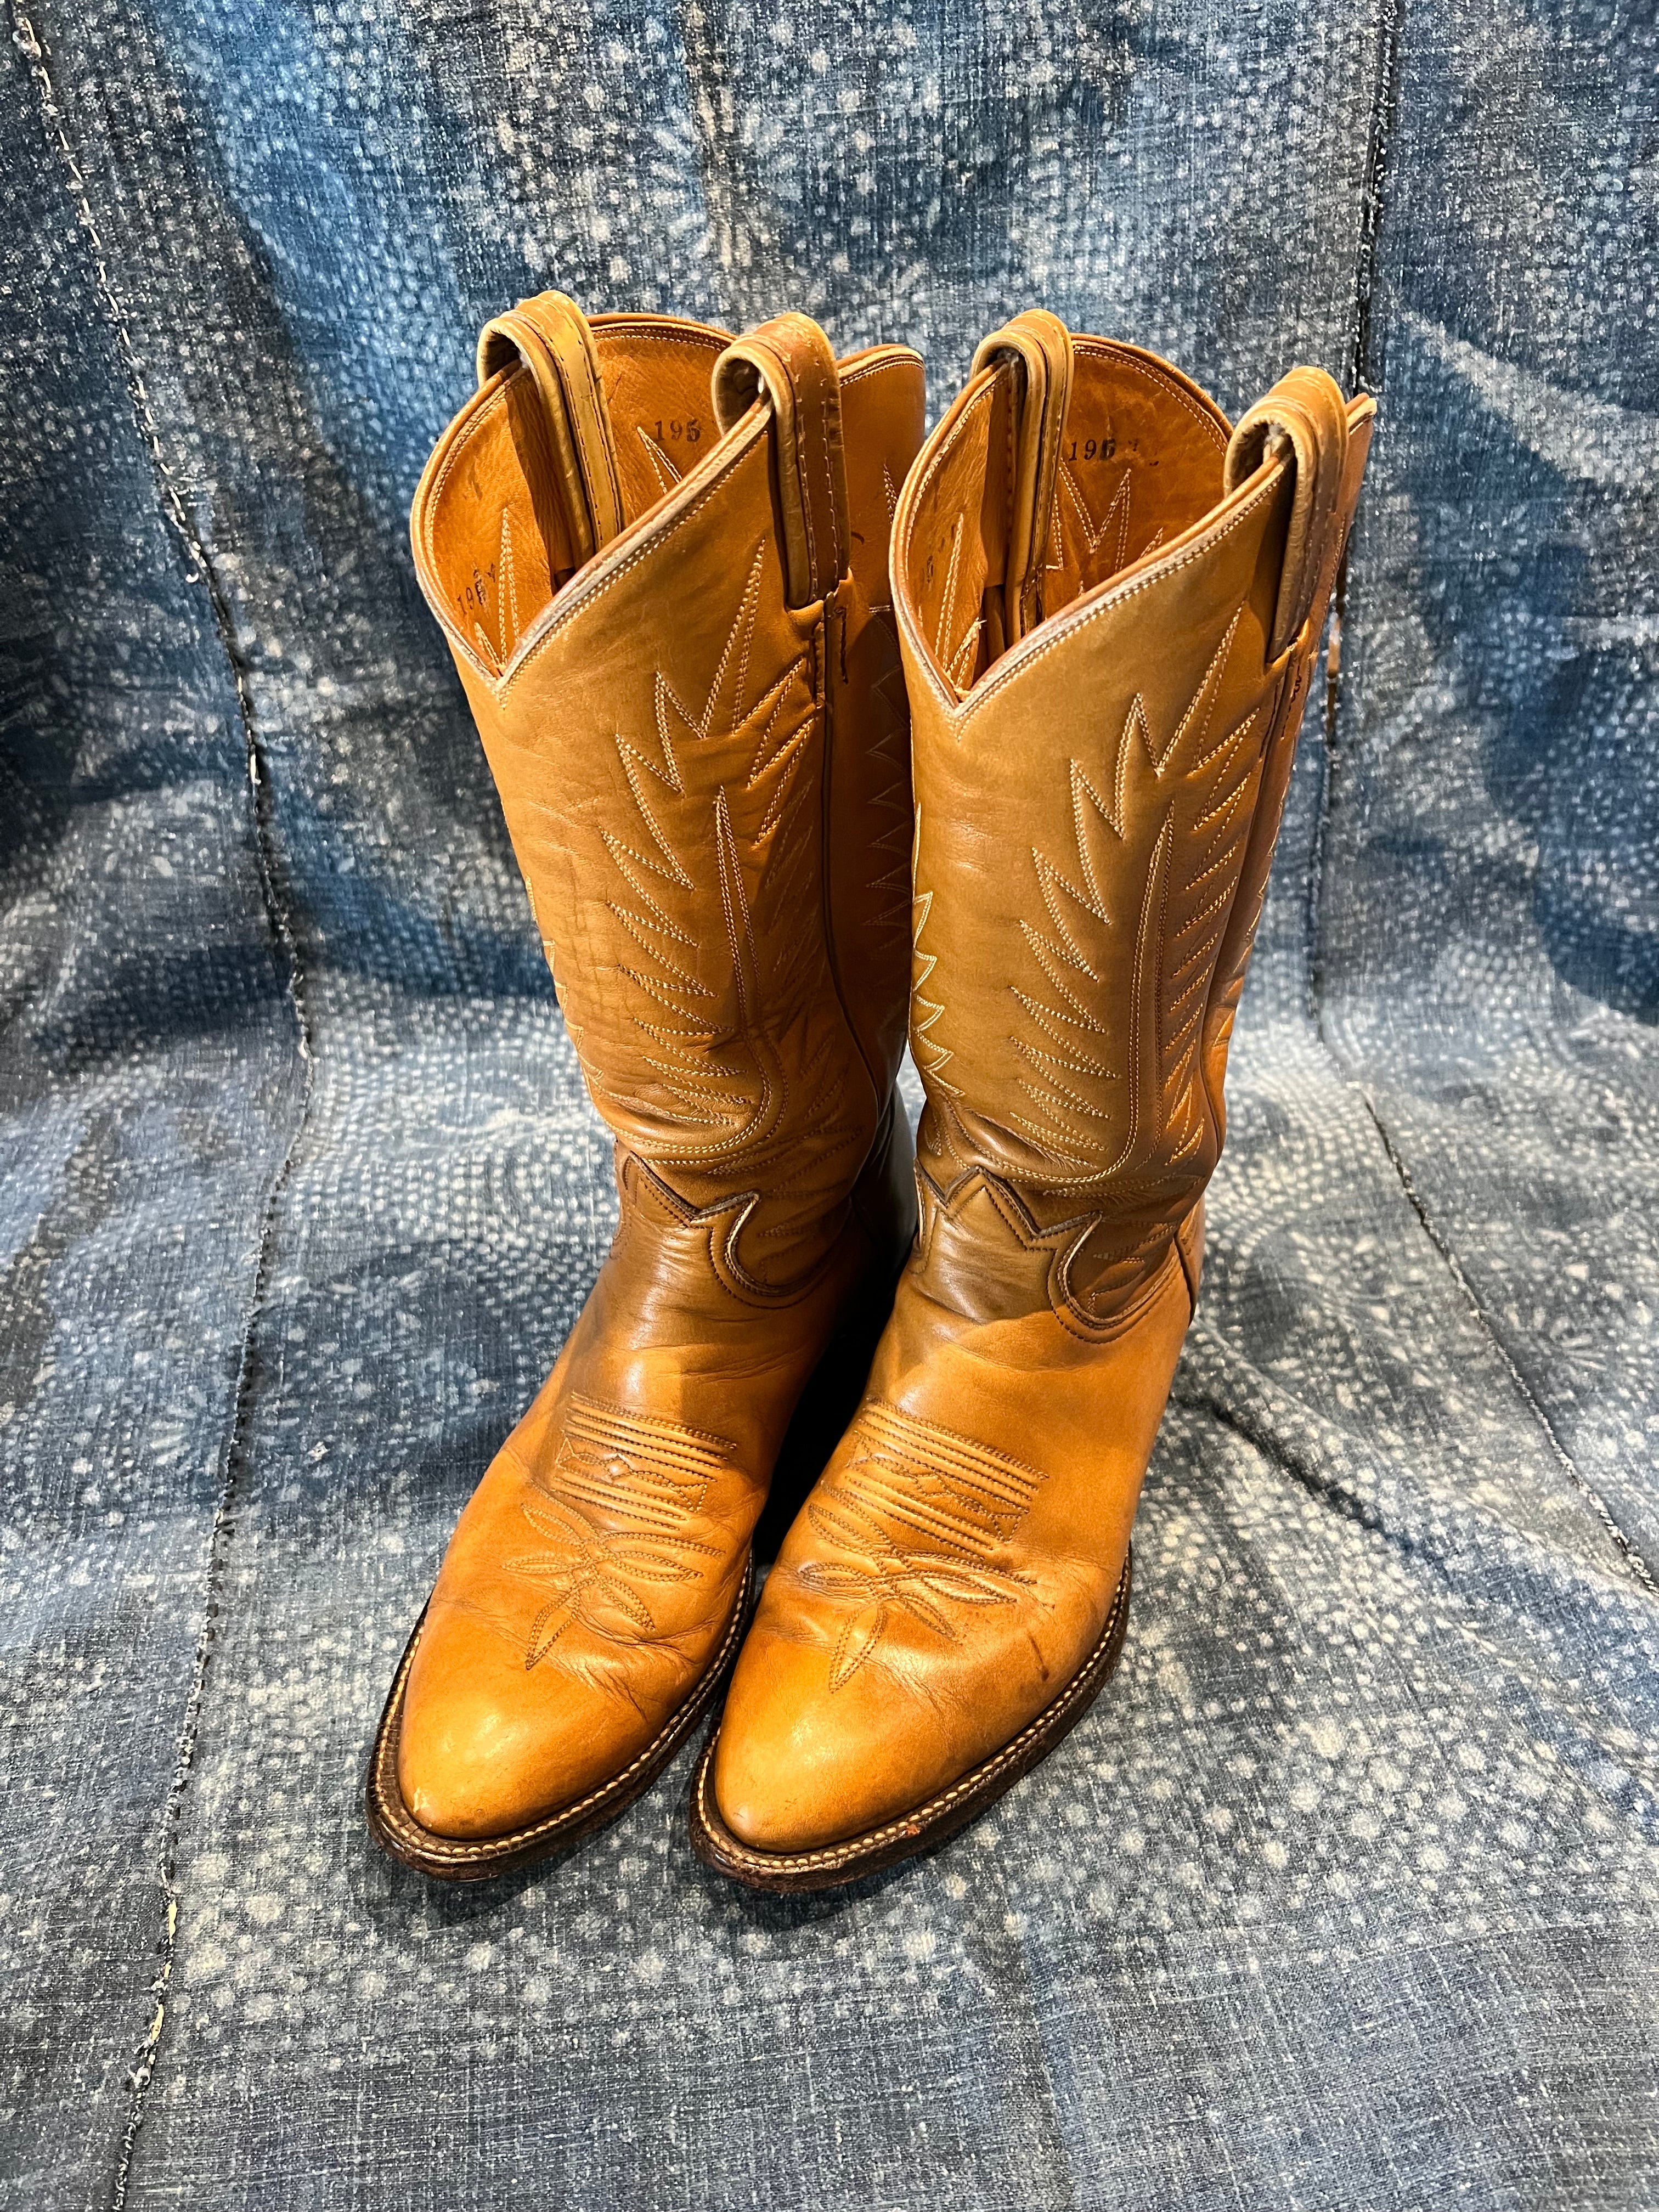 Vintage Women's Tony Lama Cowboy Boots